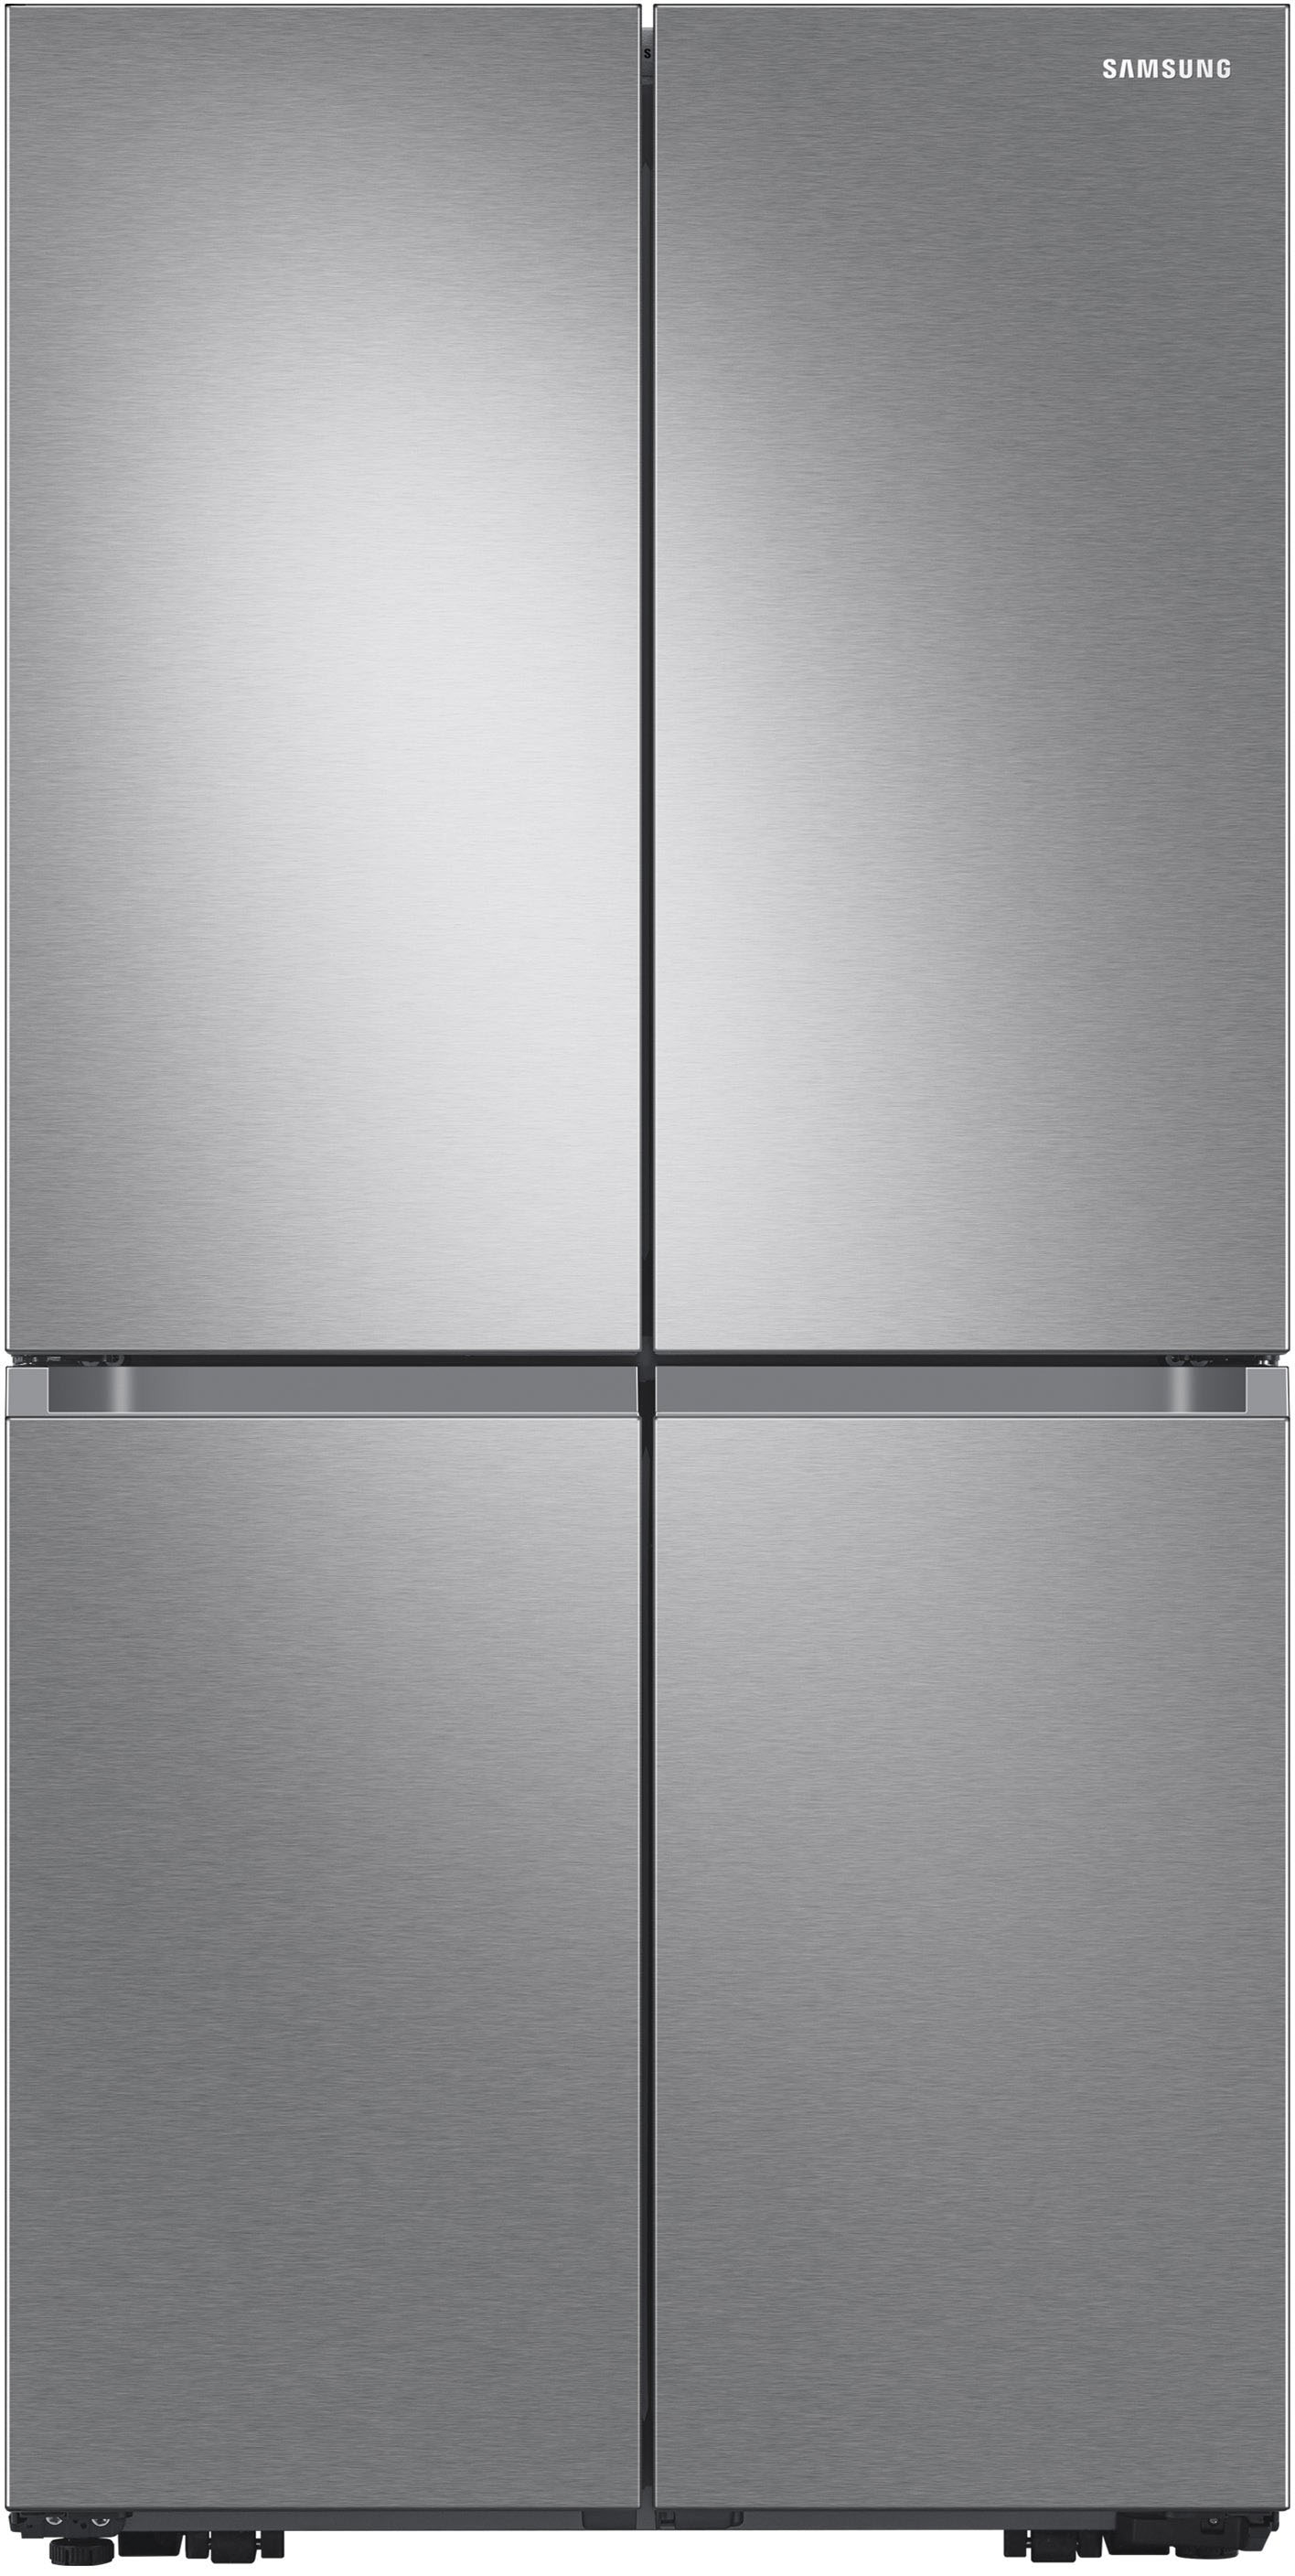 How Do I use the moisture control box on my One Door Samsung refrigerator?